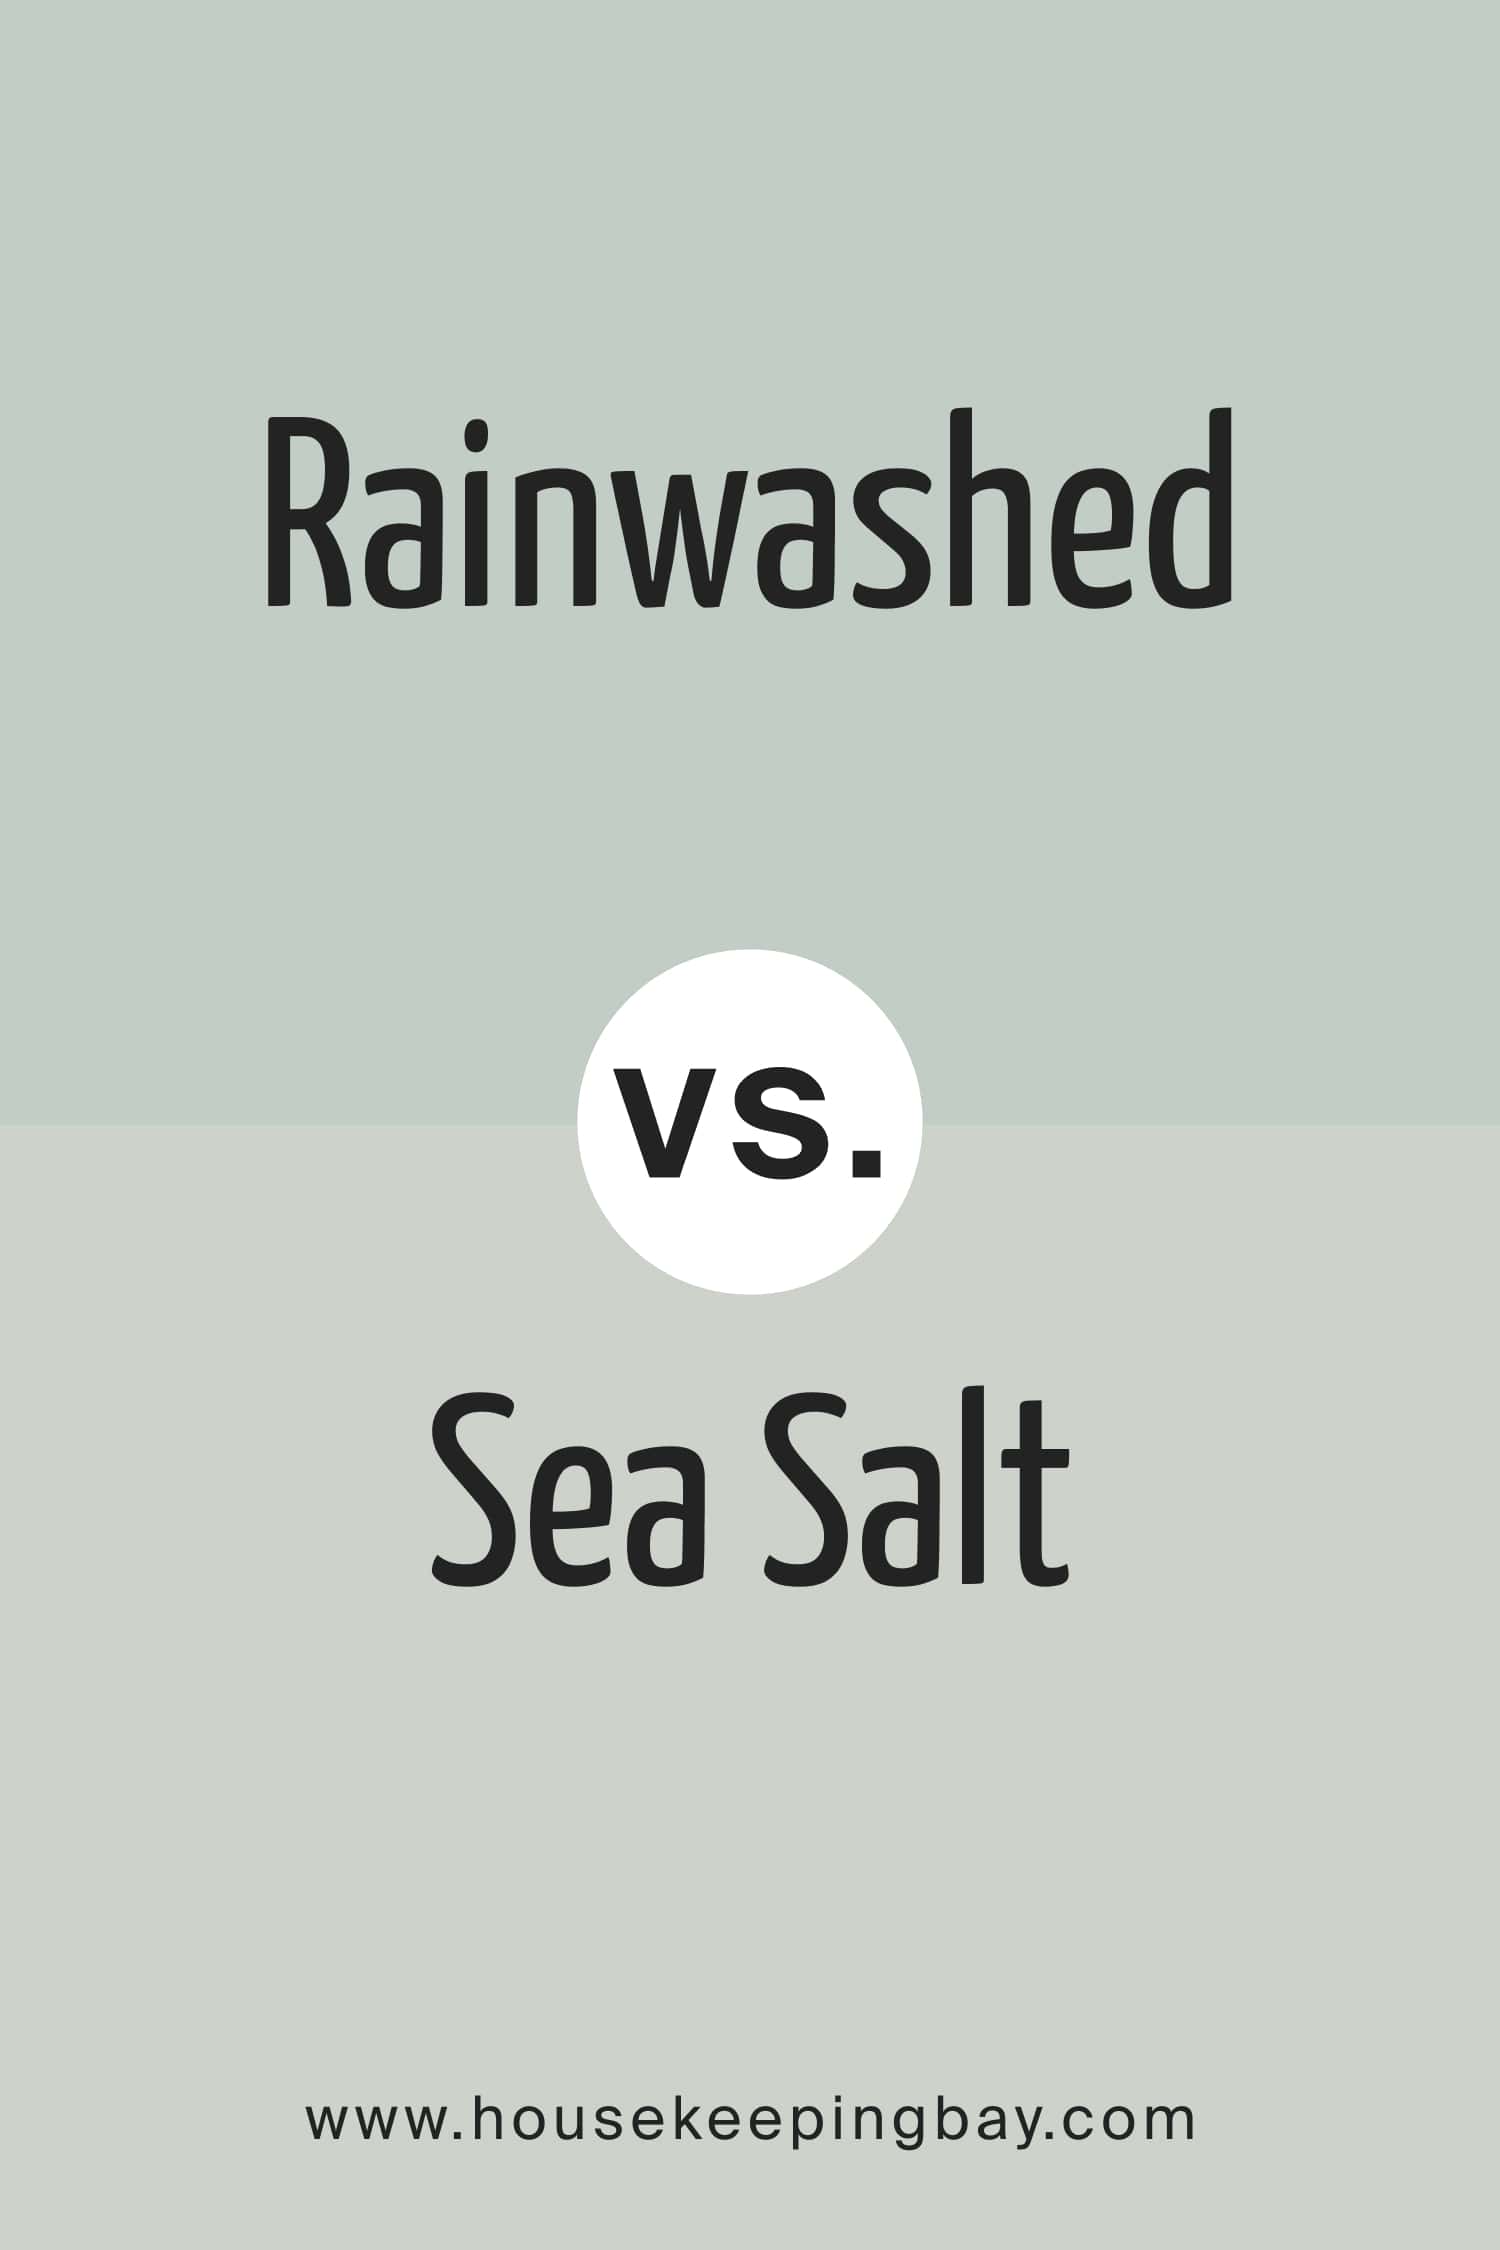 Rainwashed vs Sea Salt